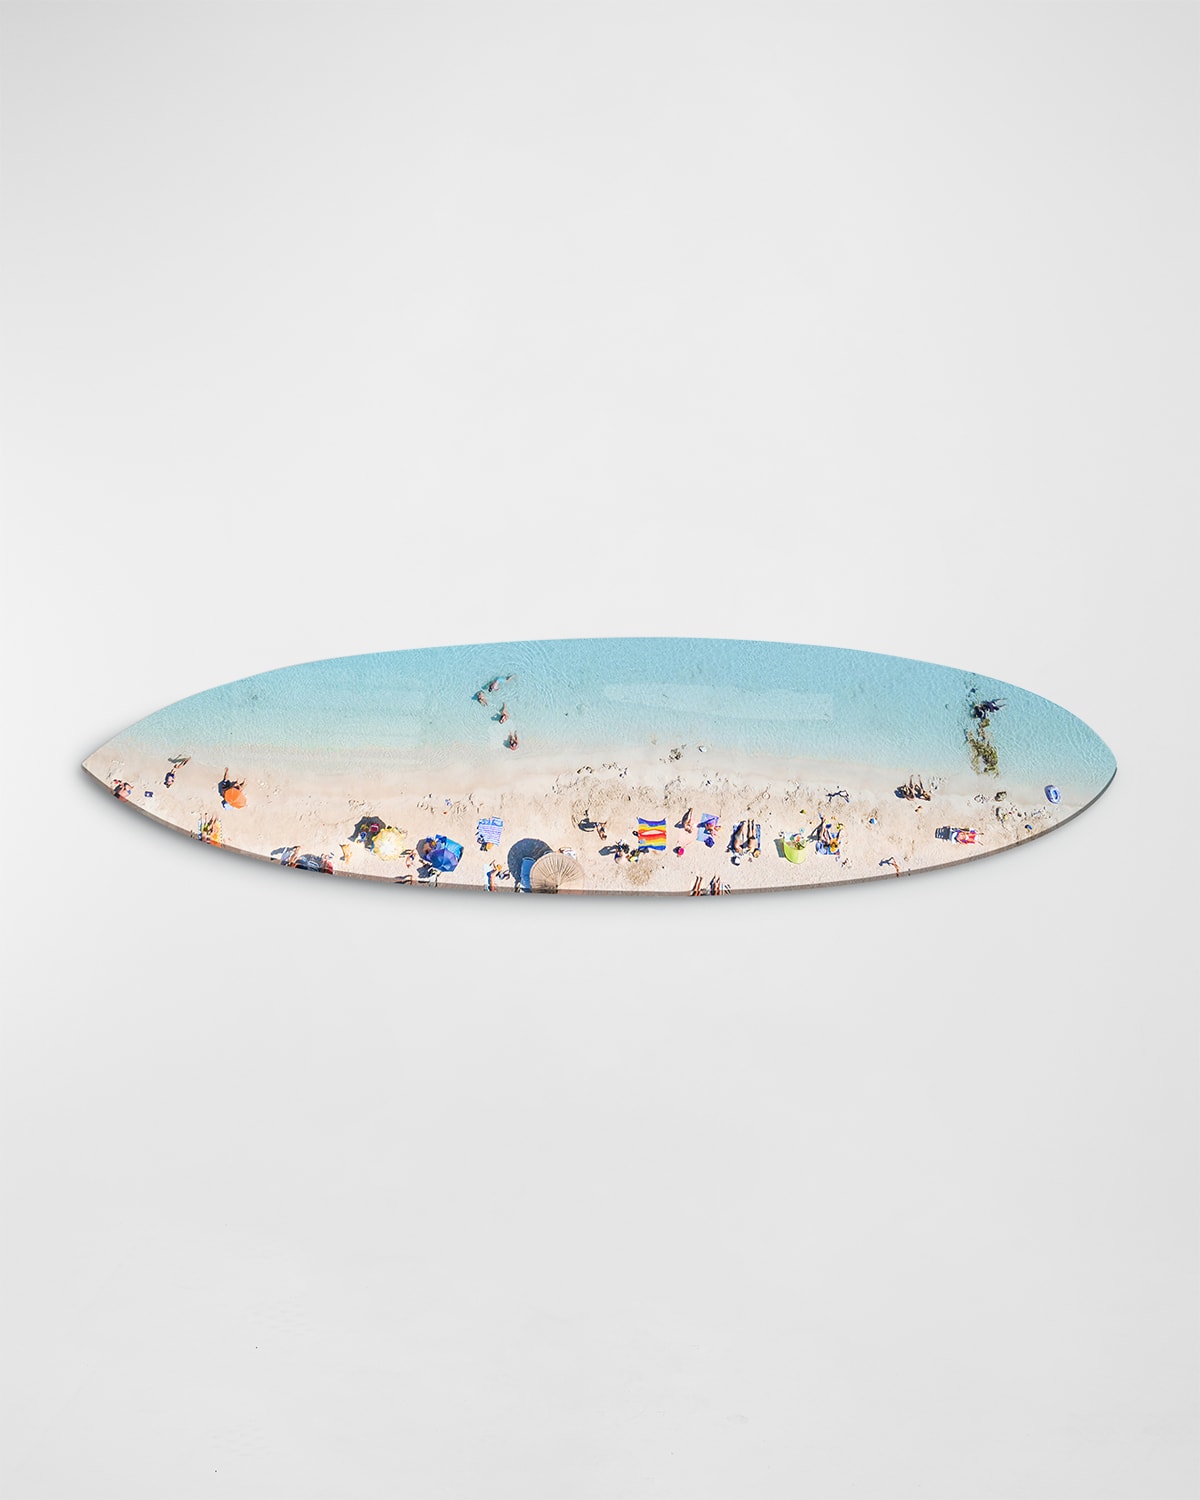 Shop The Oliver Gal Artist Co. Decorative Surfboard Art In Italian Summer